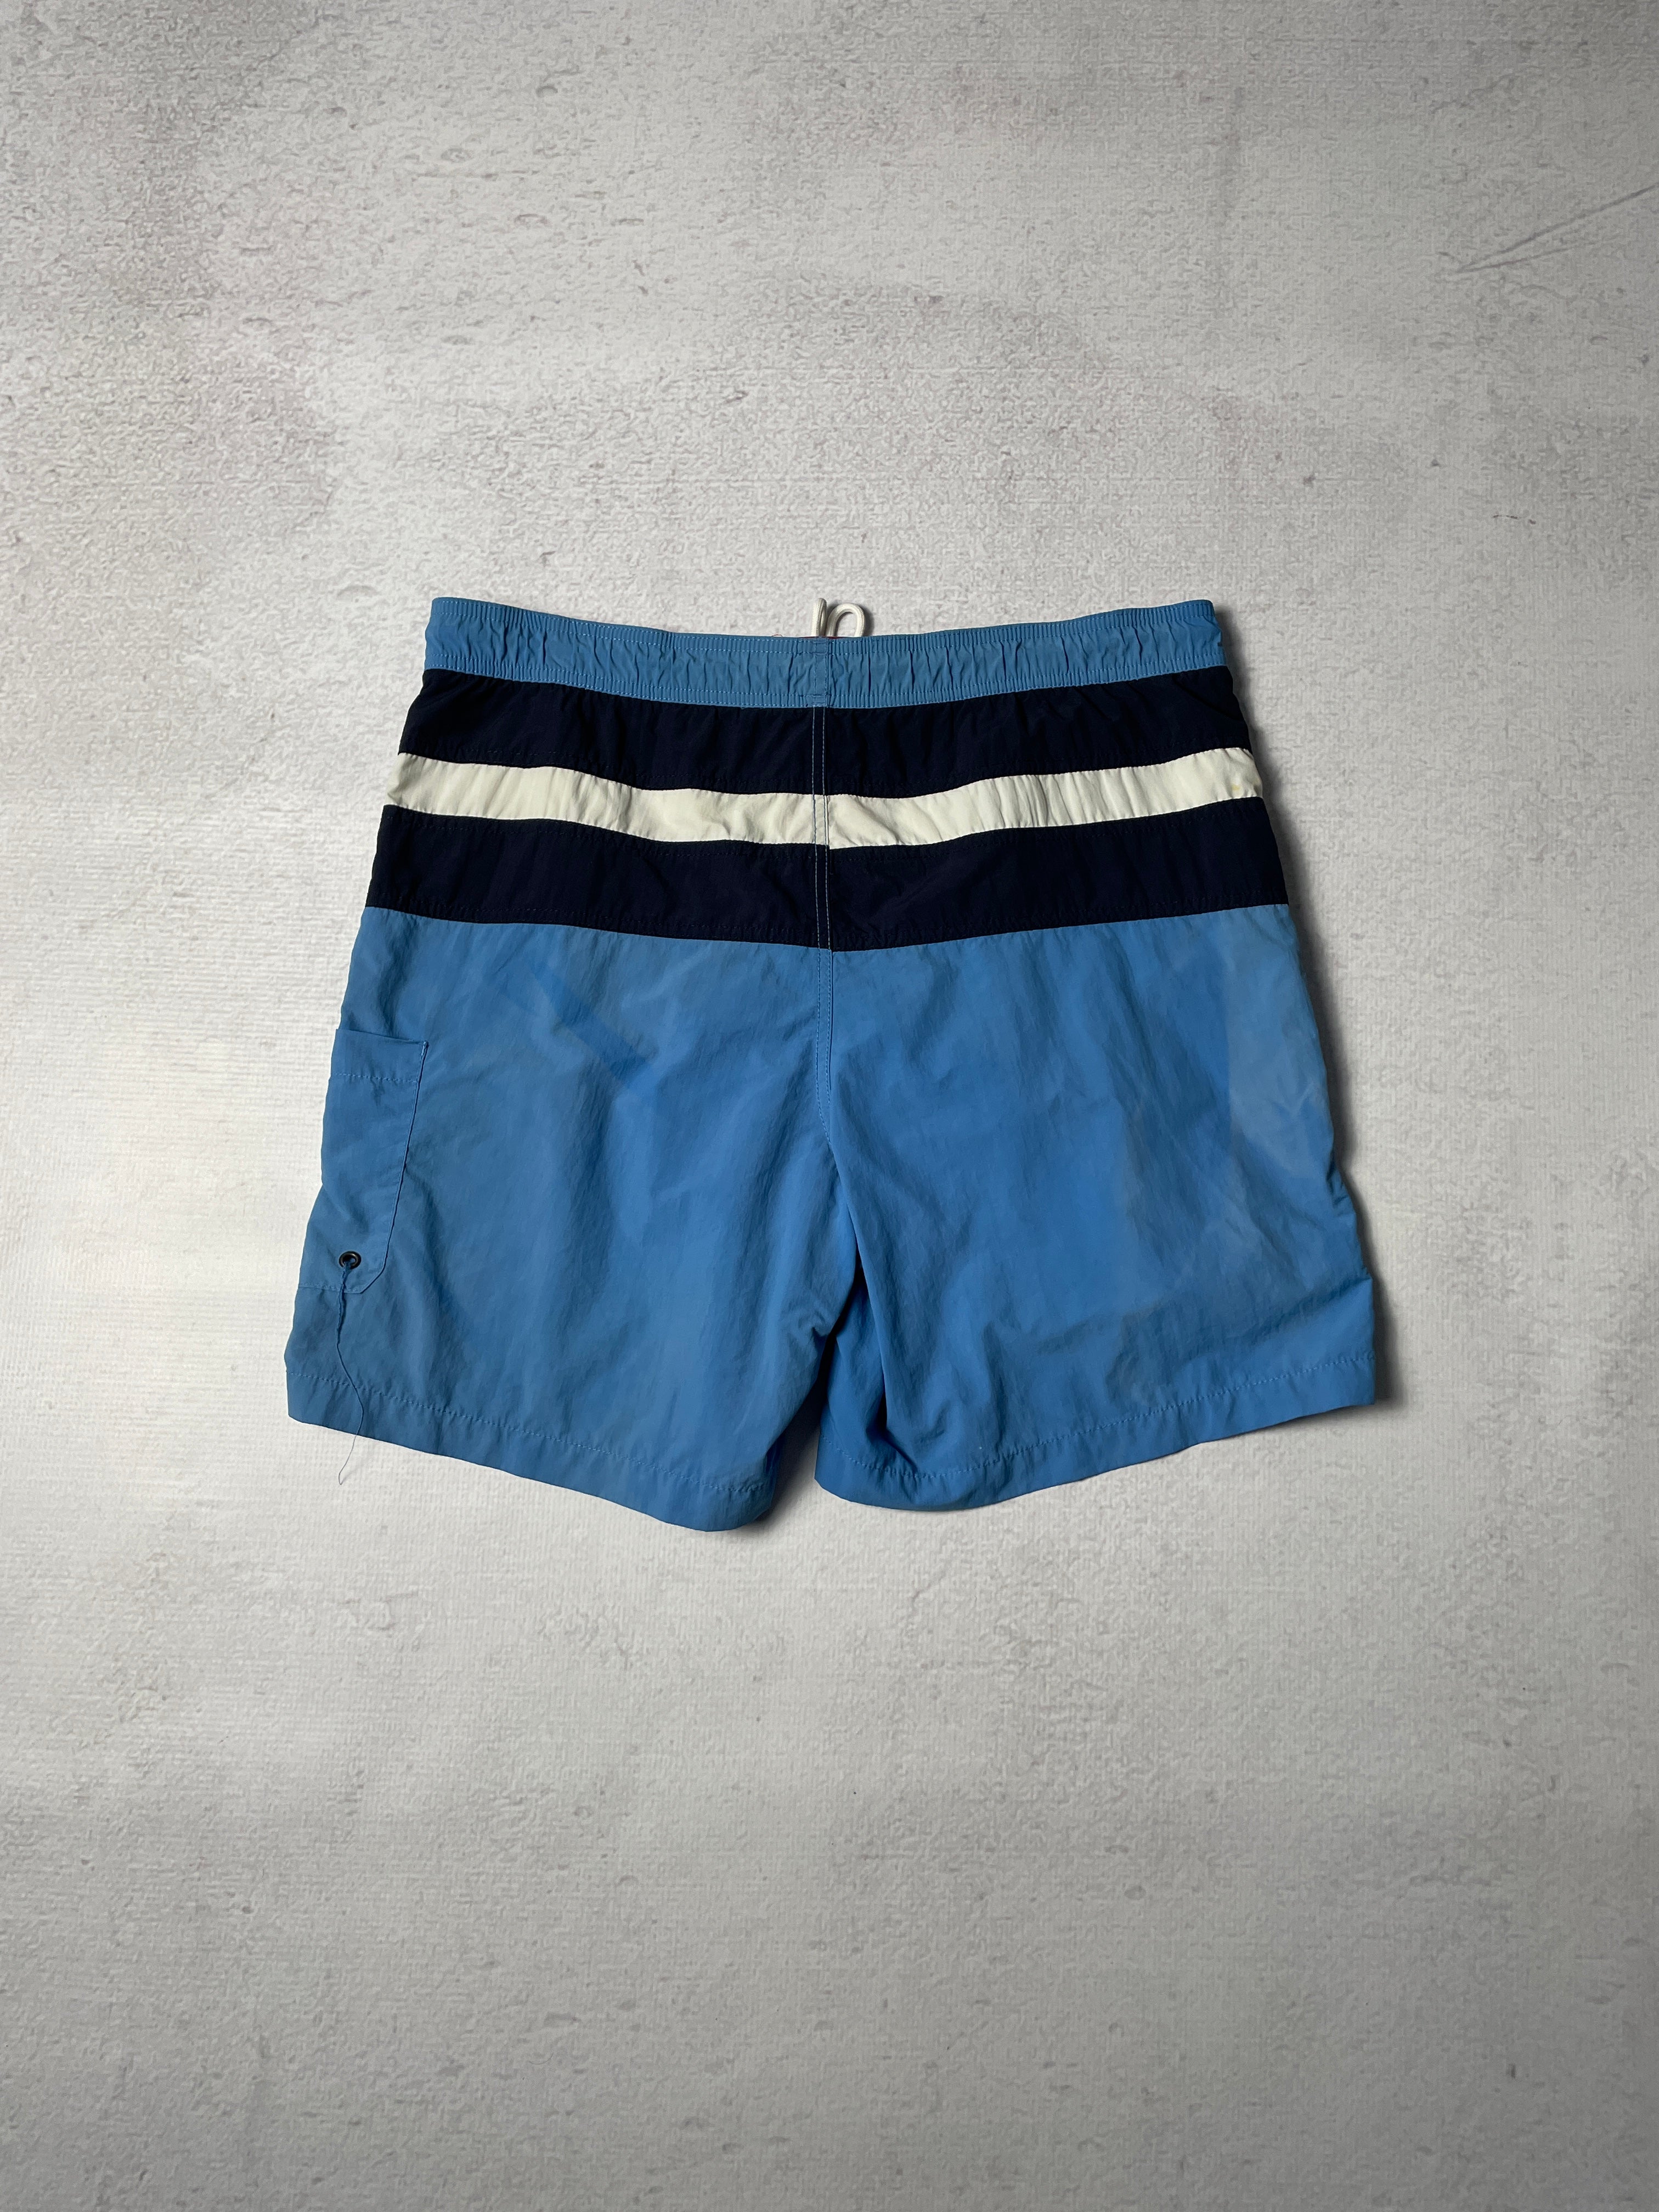 Vintage Nautica Board Shorts - Men's Medium